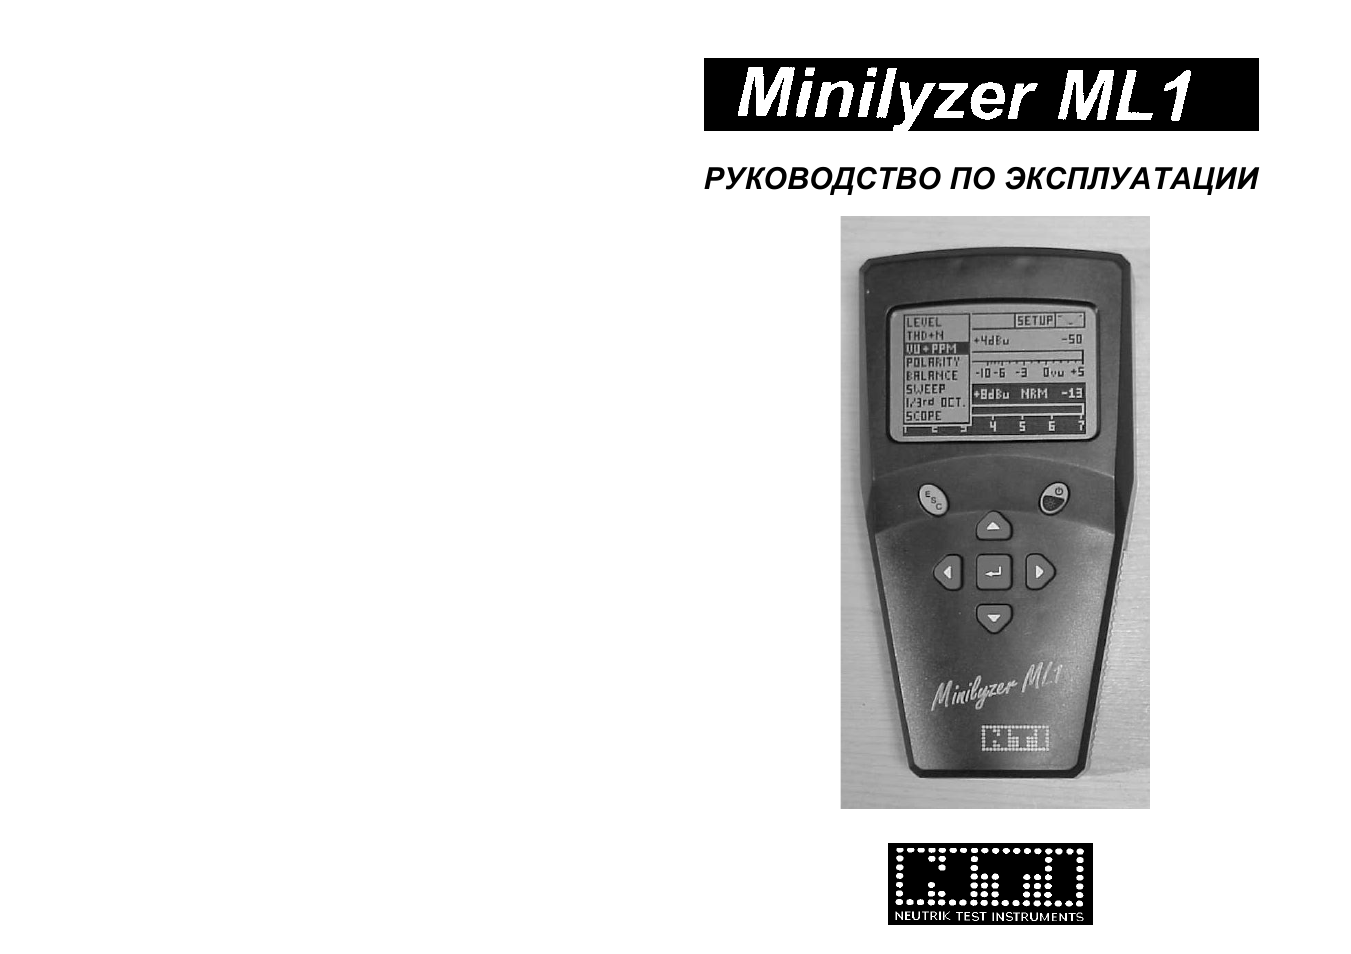 Инструкция по эксплуатации Nti minilyzer_ml1 | 16 страниц